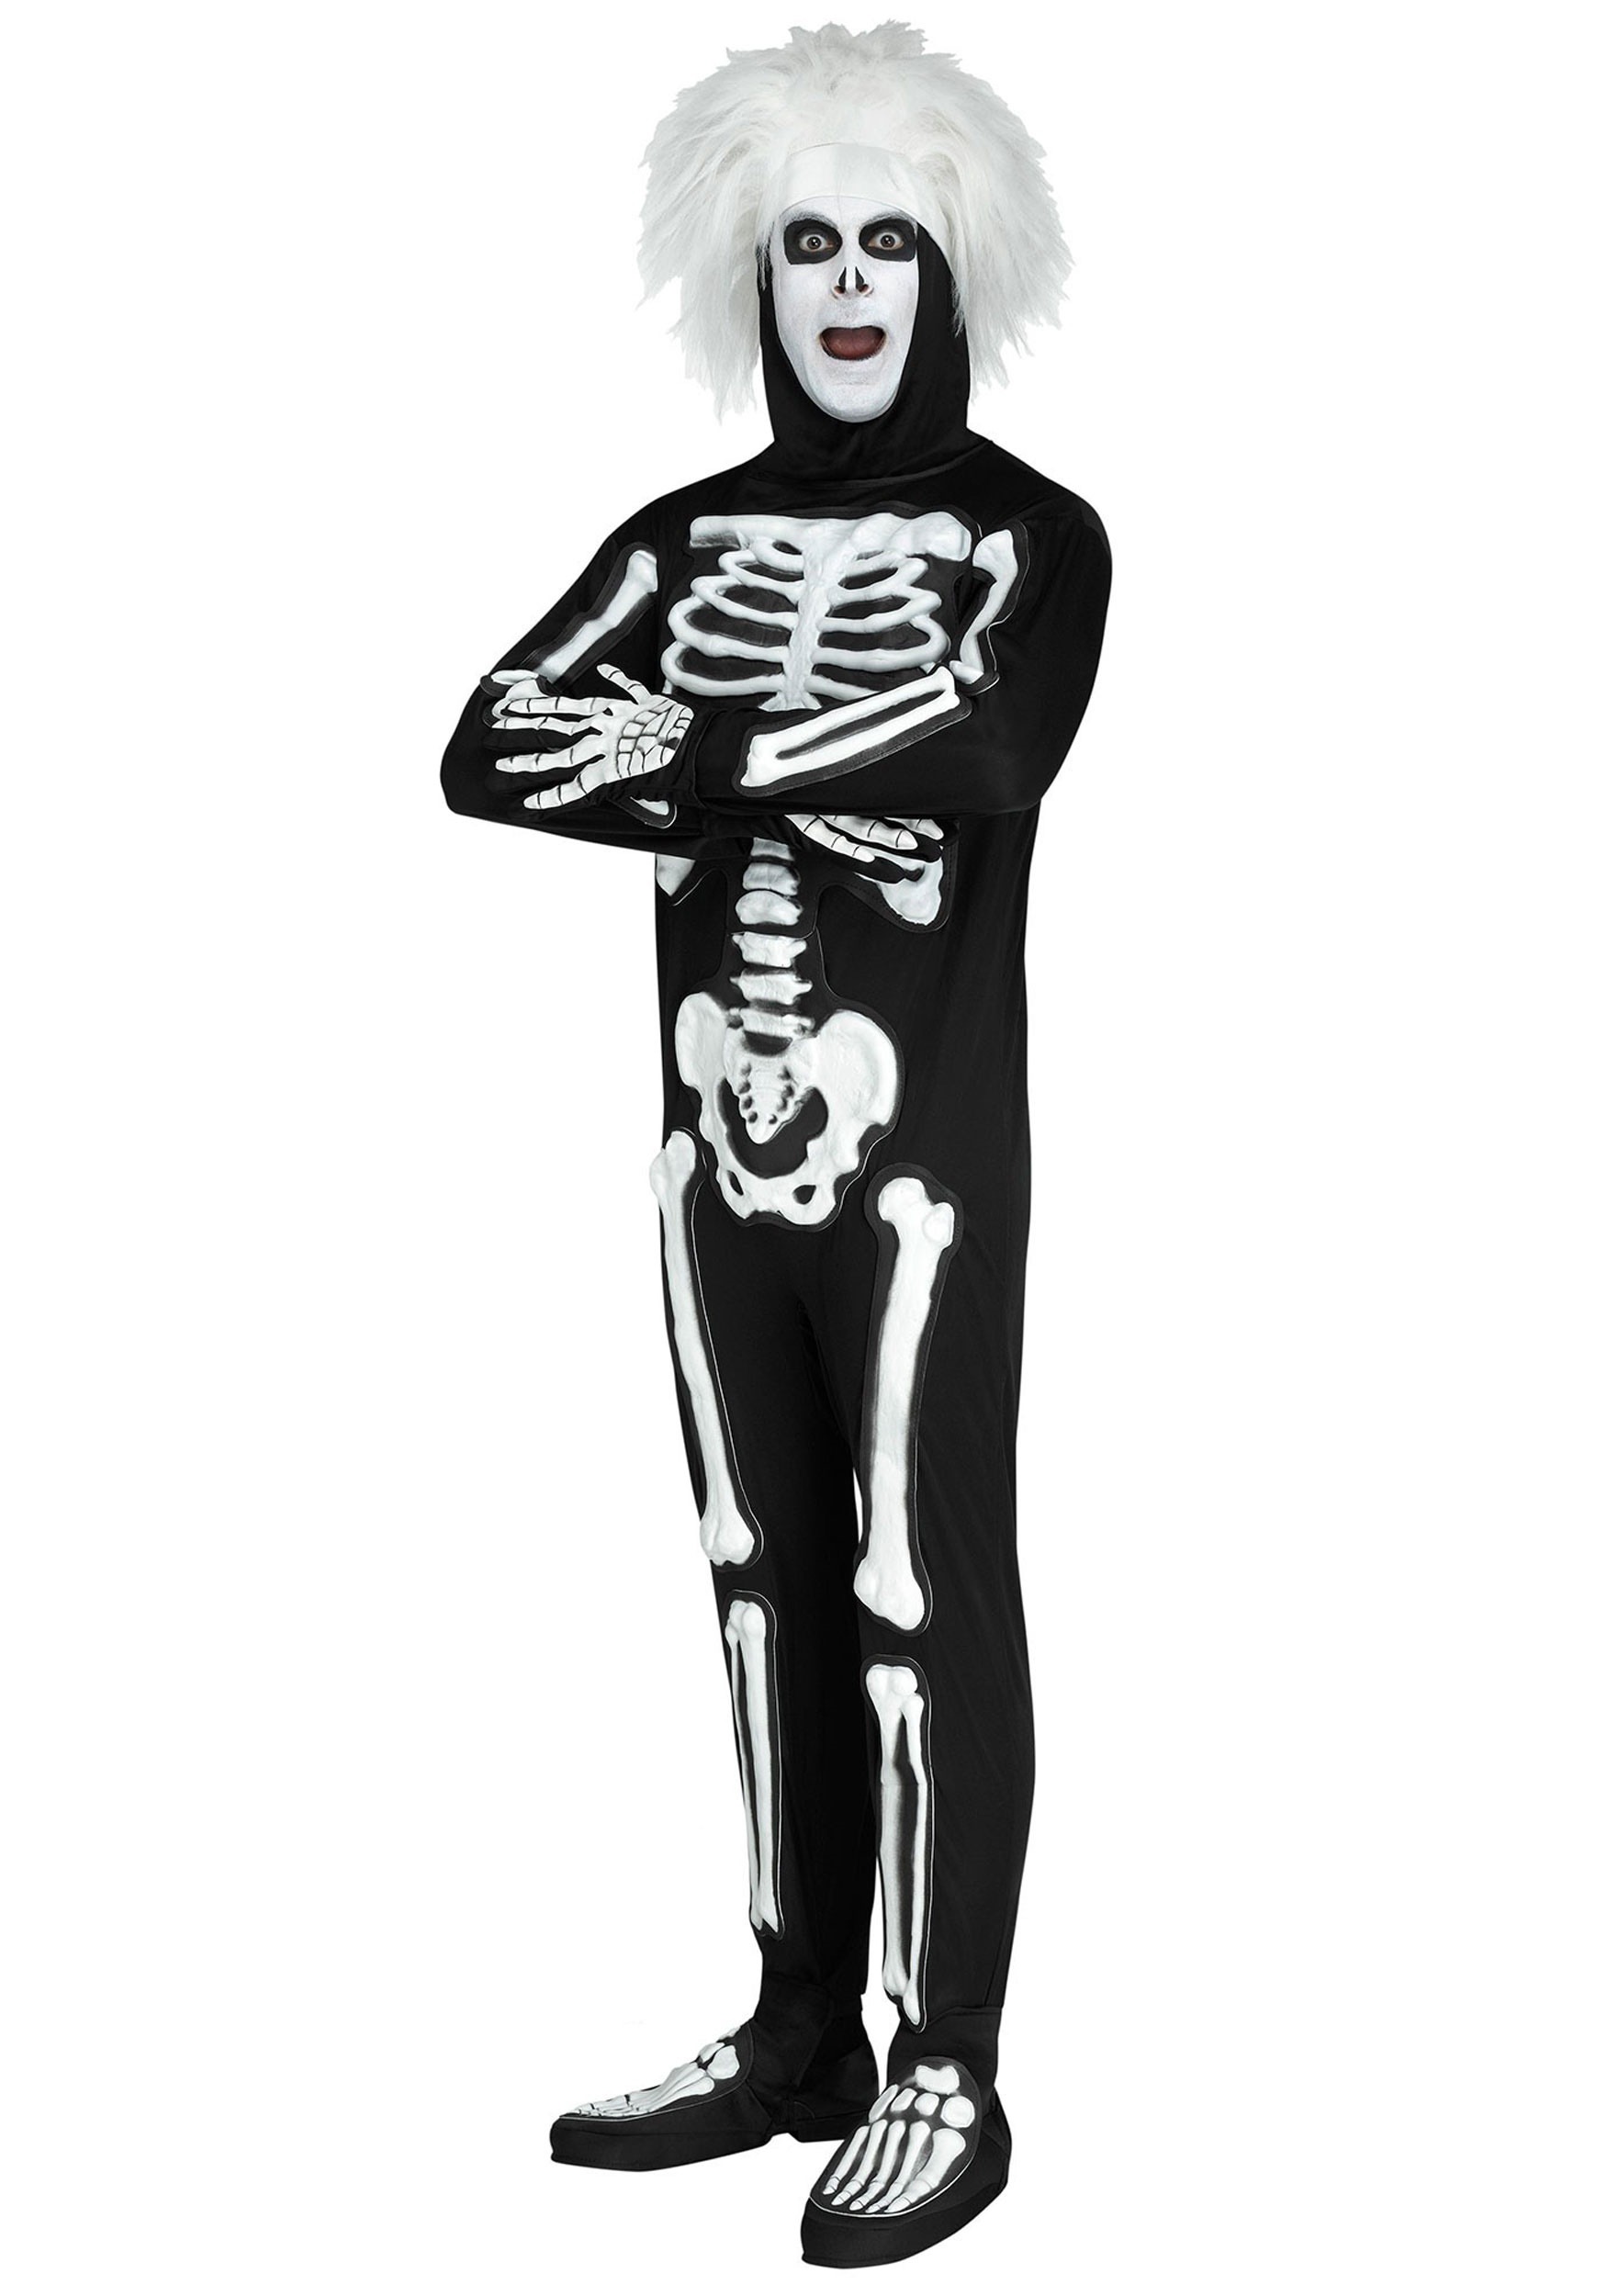 Photos - Fancy Dress Fun World SNL Beat Boy Skeleton Costume for Men Black/White FU100254